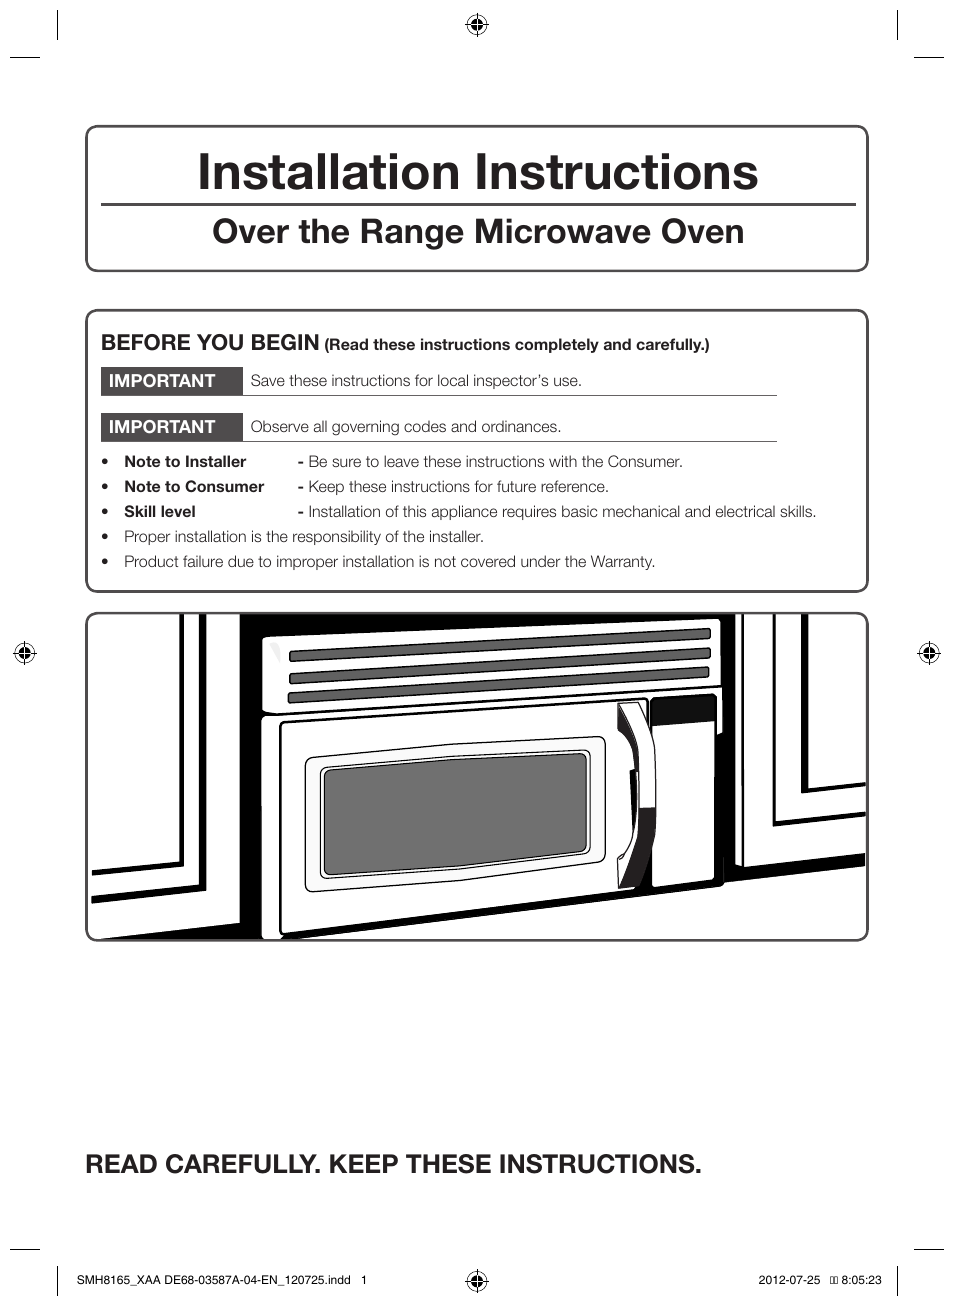 Samsung Over The Range Microwave User Manual